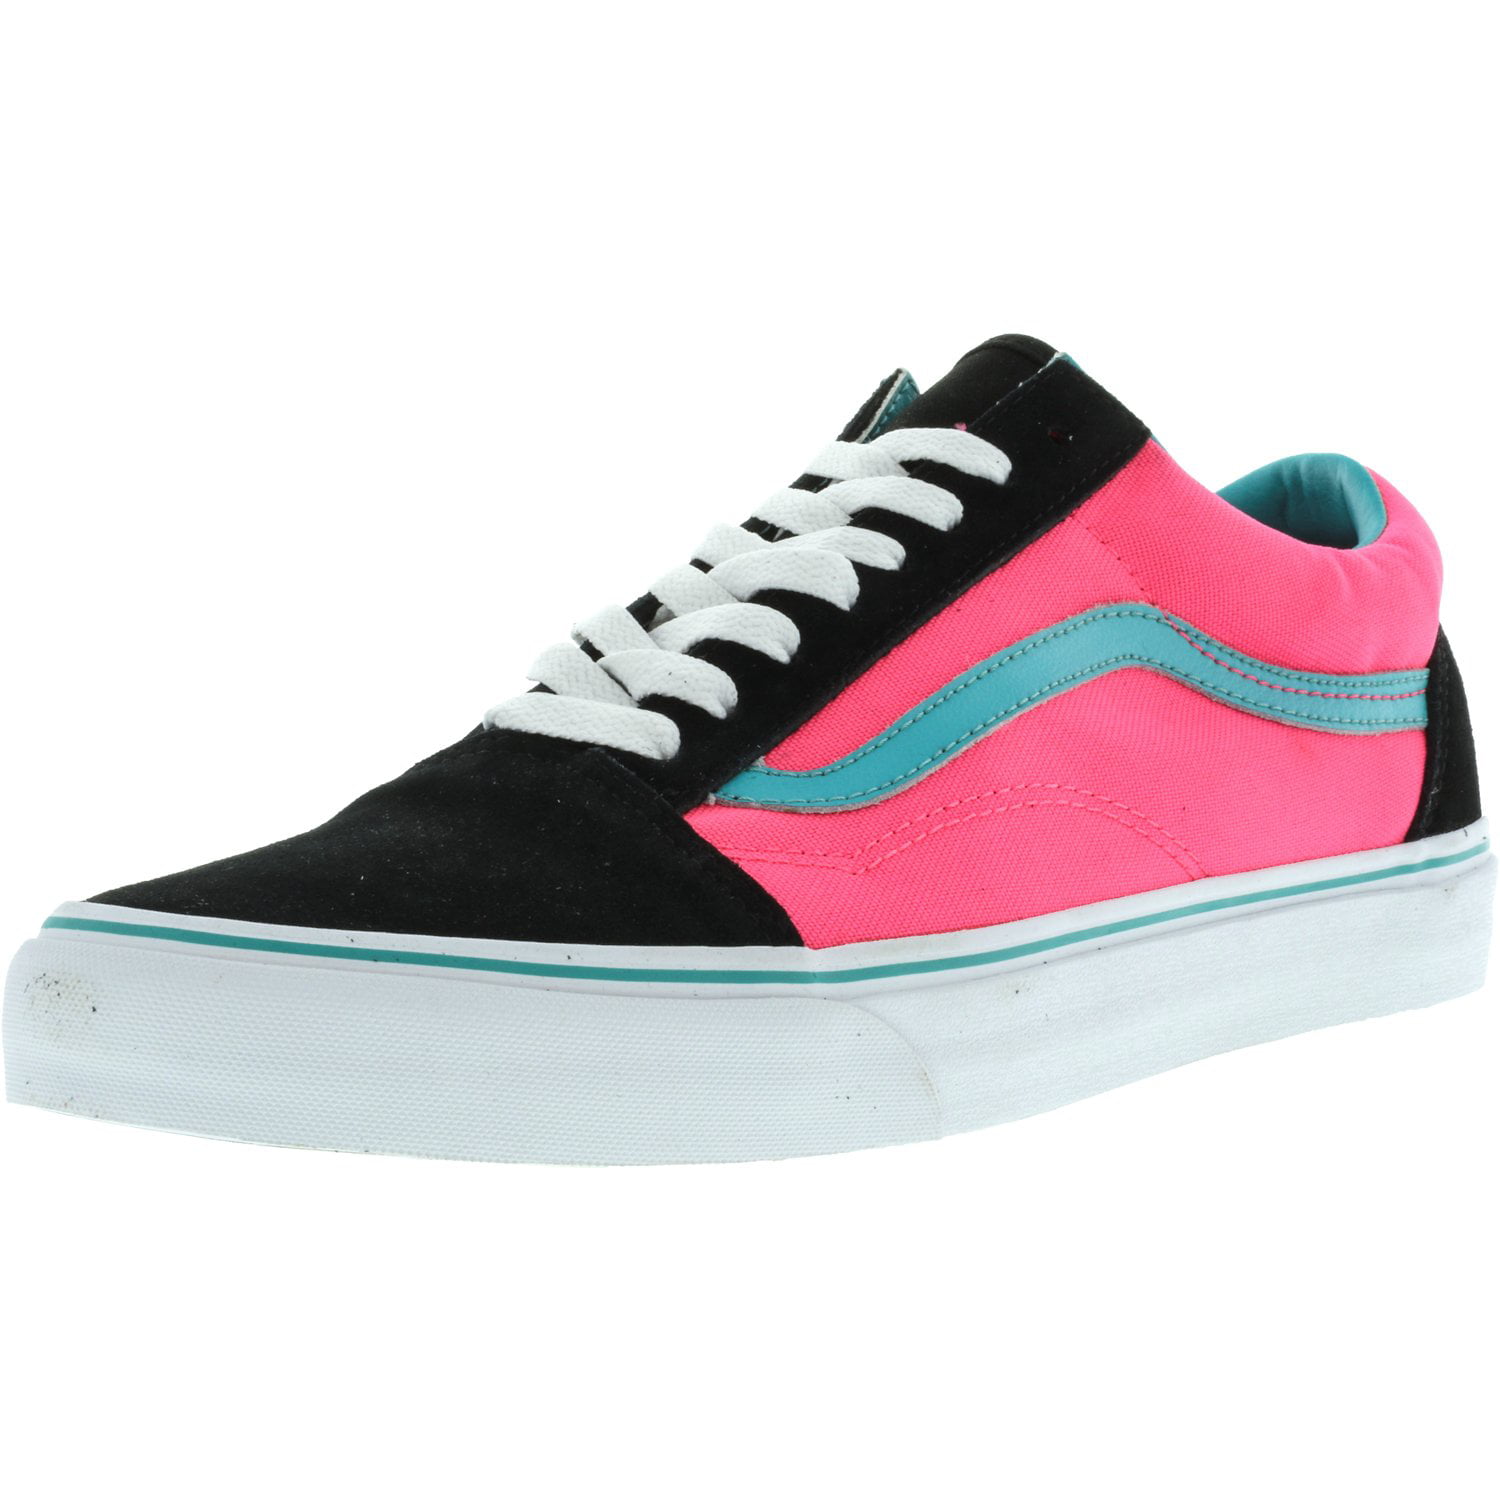 Vans Men's Old Skool Brite Black / Neon Pink Ankle-High Canvas  Skateboarding Shoe - 11M 